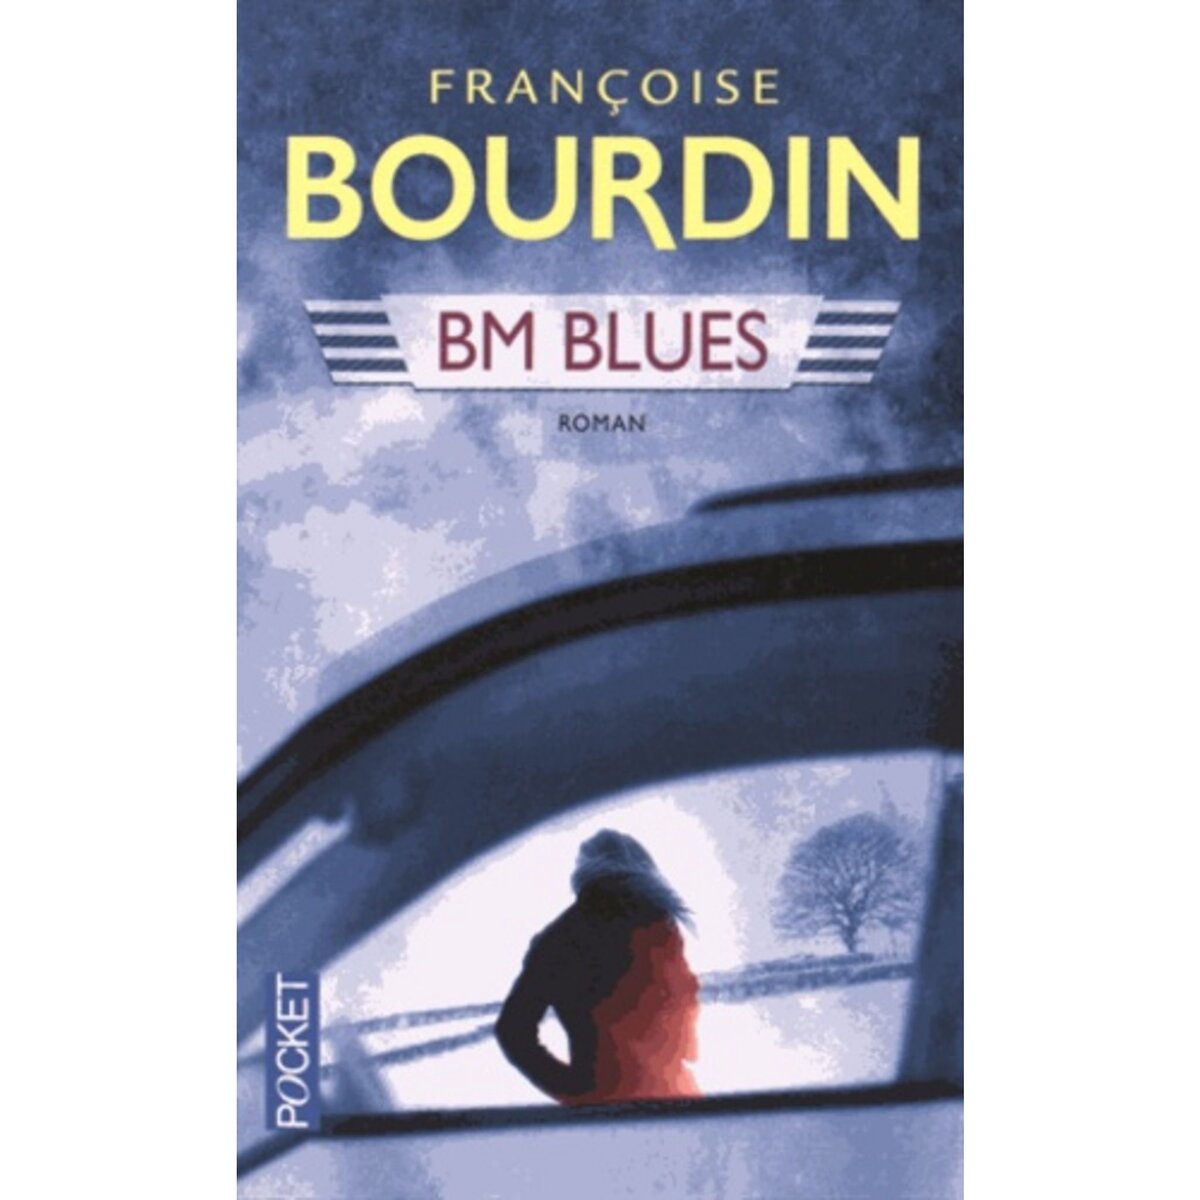  BM blues, Bourdin Françoise